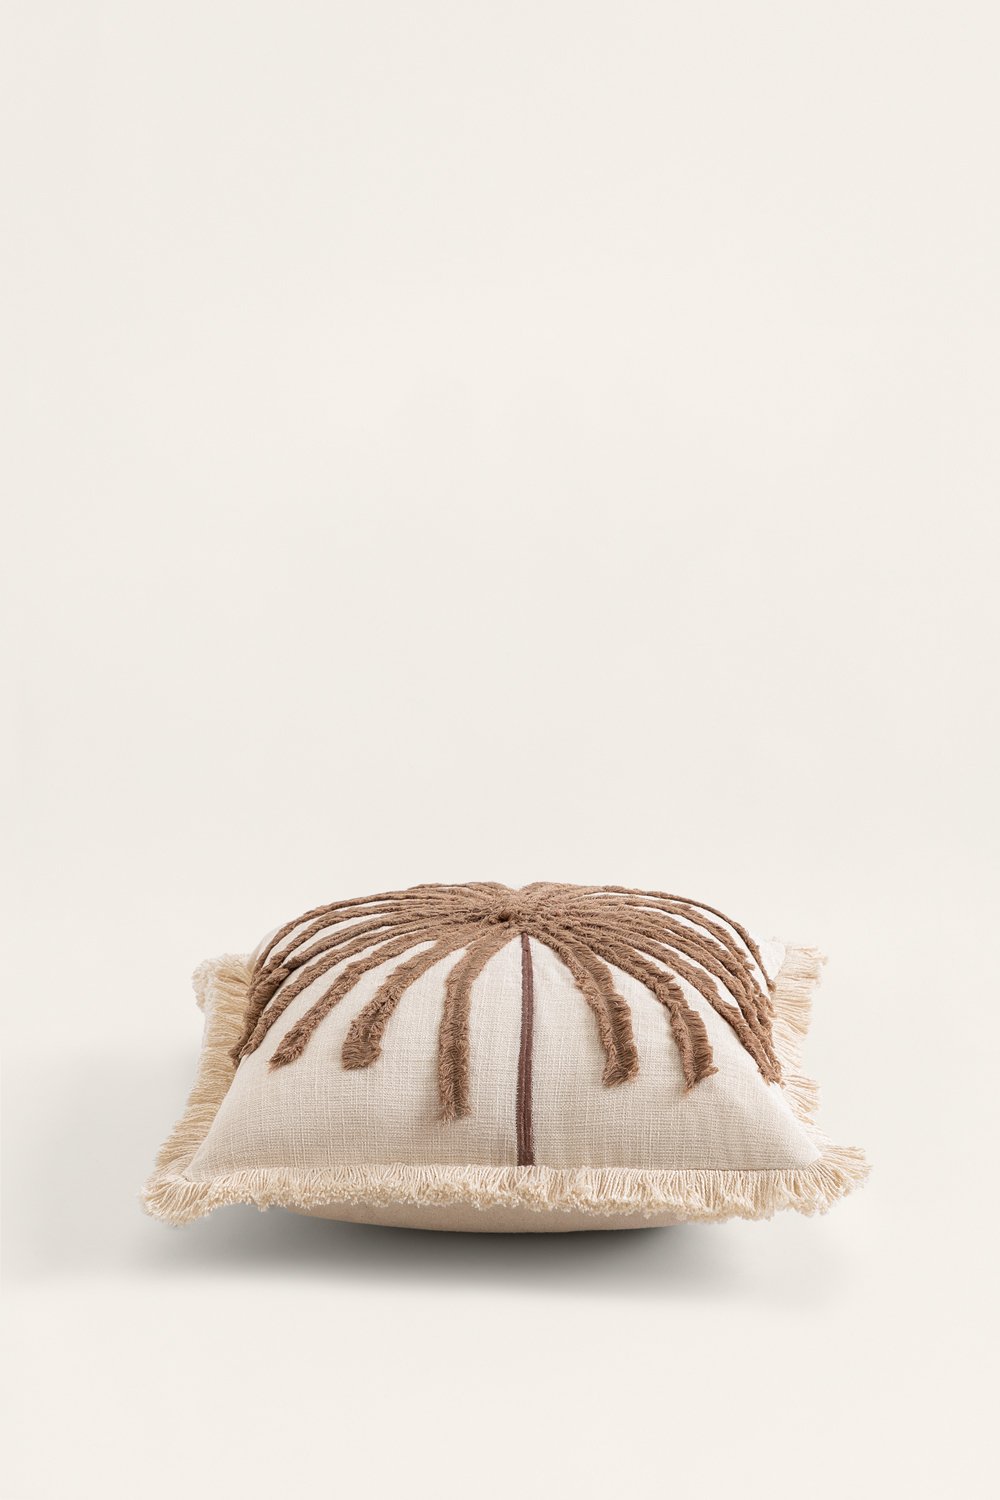 Square Cotton Cushion (45x45 cm) Korumba, gallery image 2